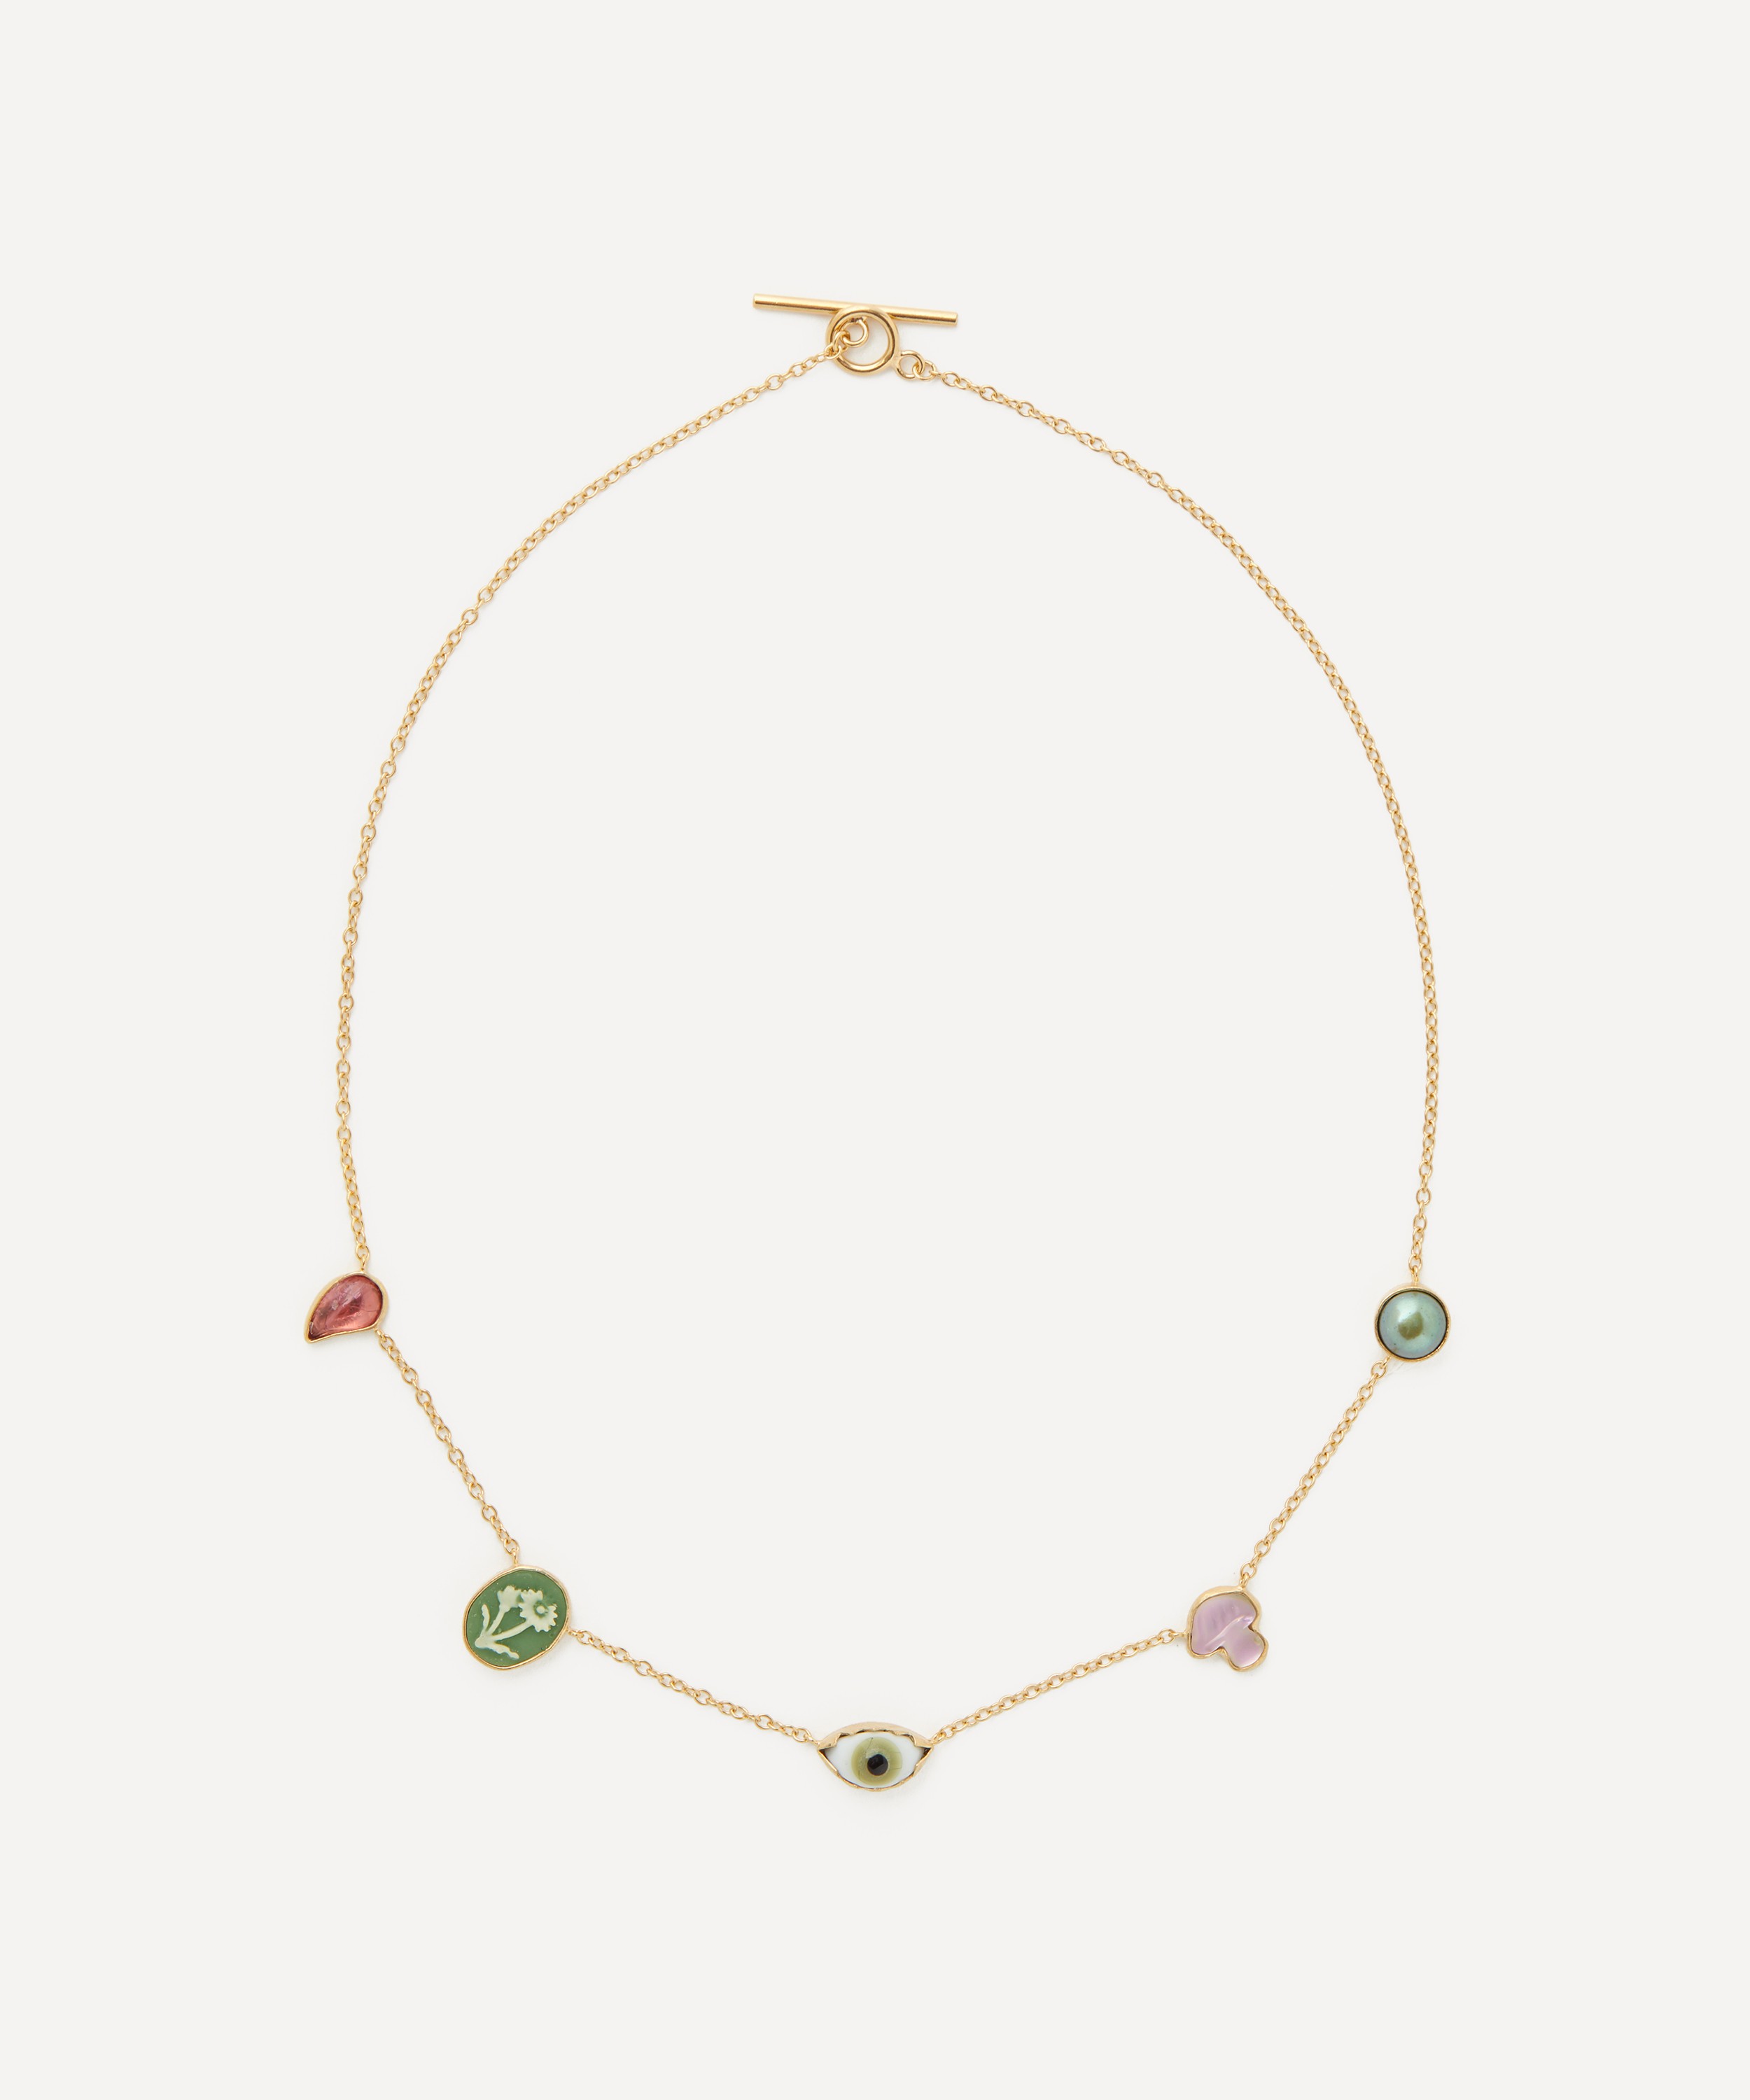 Grainne Morton - Gold-Plated Five Mini Charm Necklace